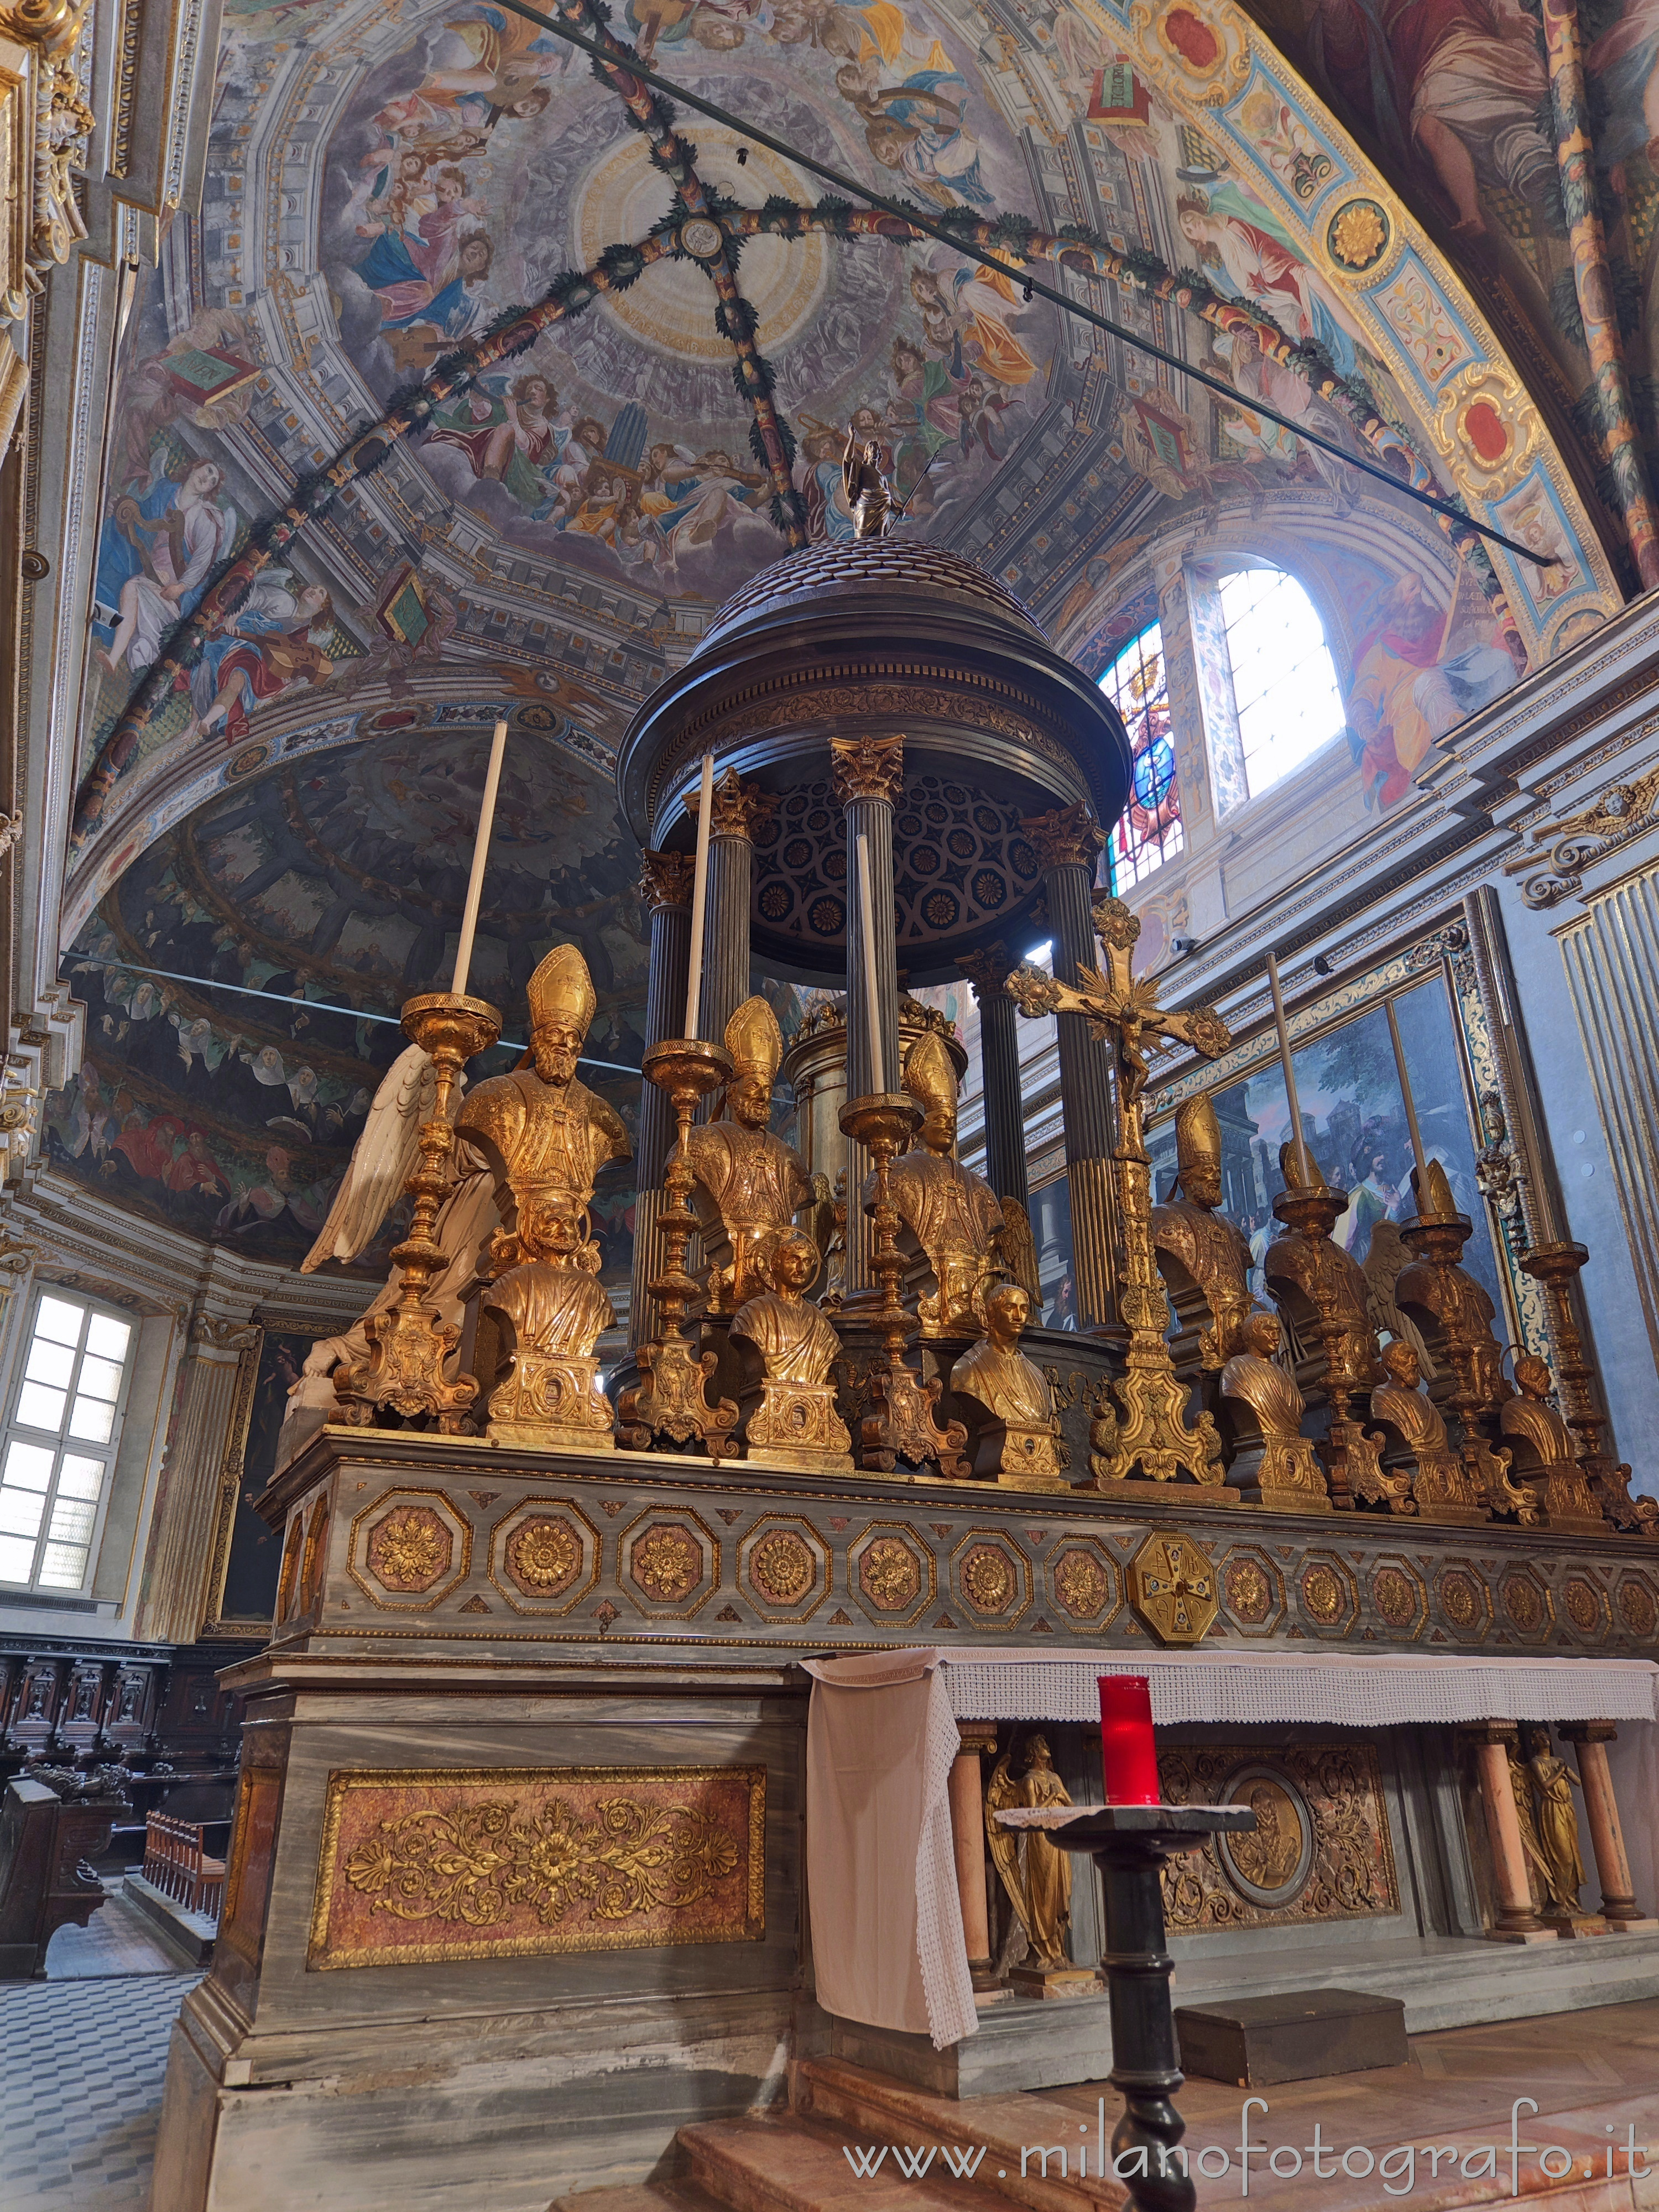 Milan (Italy): Main altar of the Basilica of San Marco - Milan (Italy)